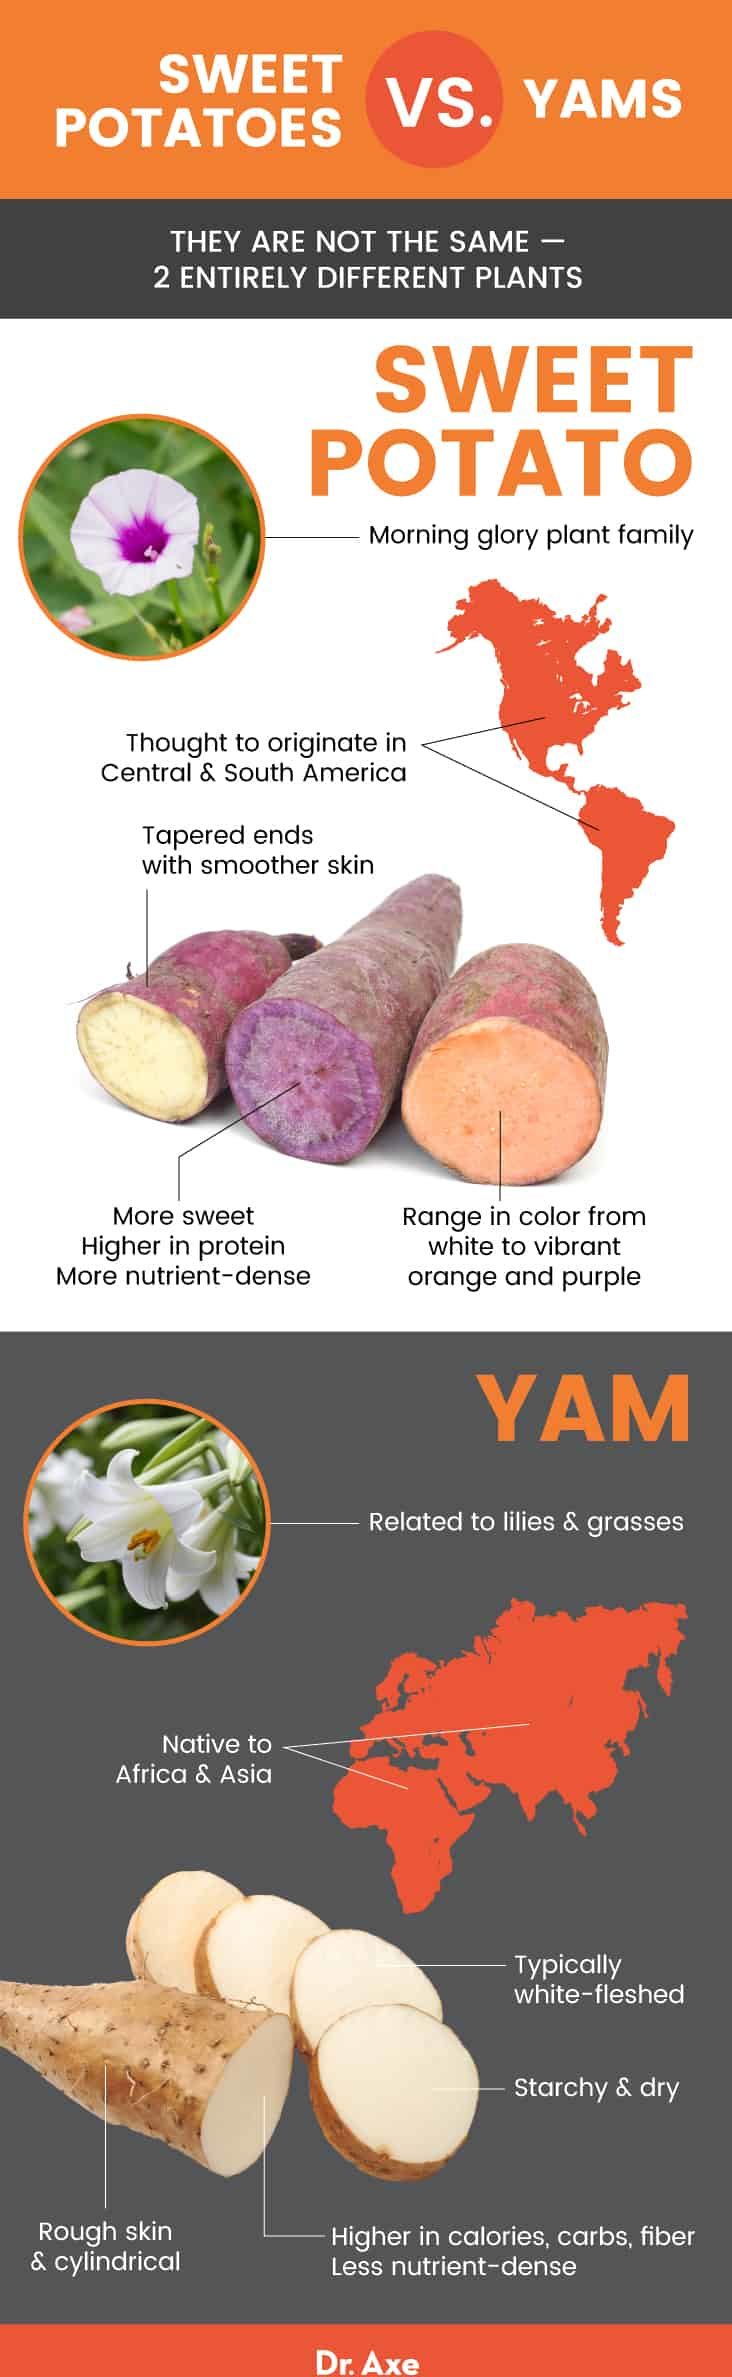 Sweet potato vs. yam - Dr. Axe